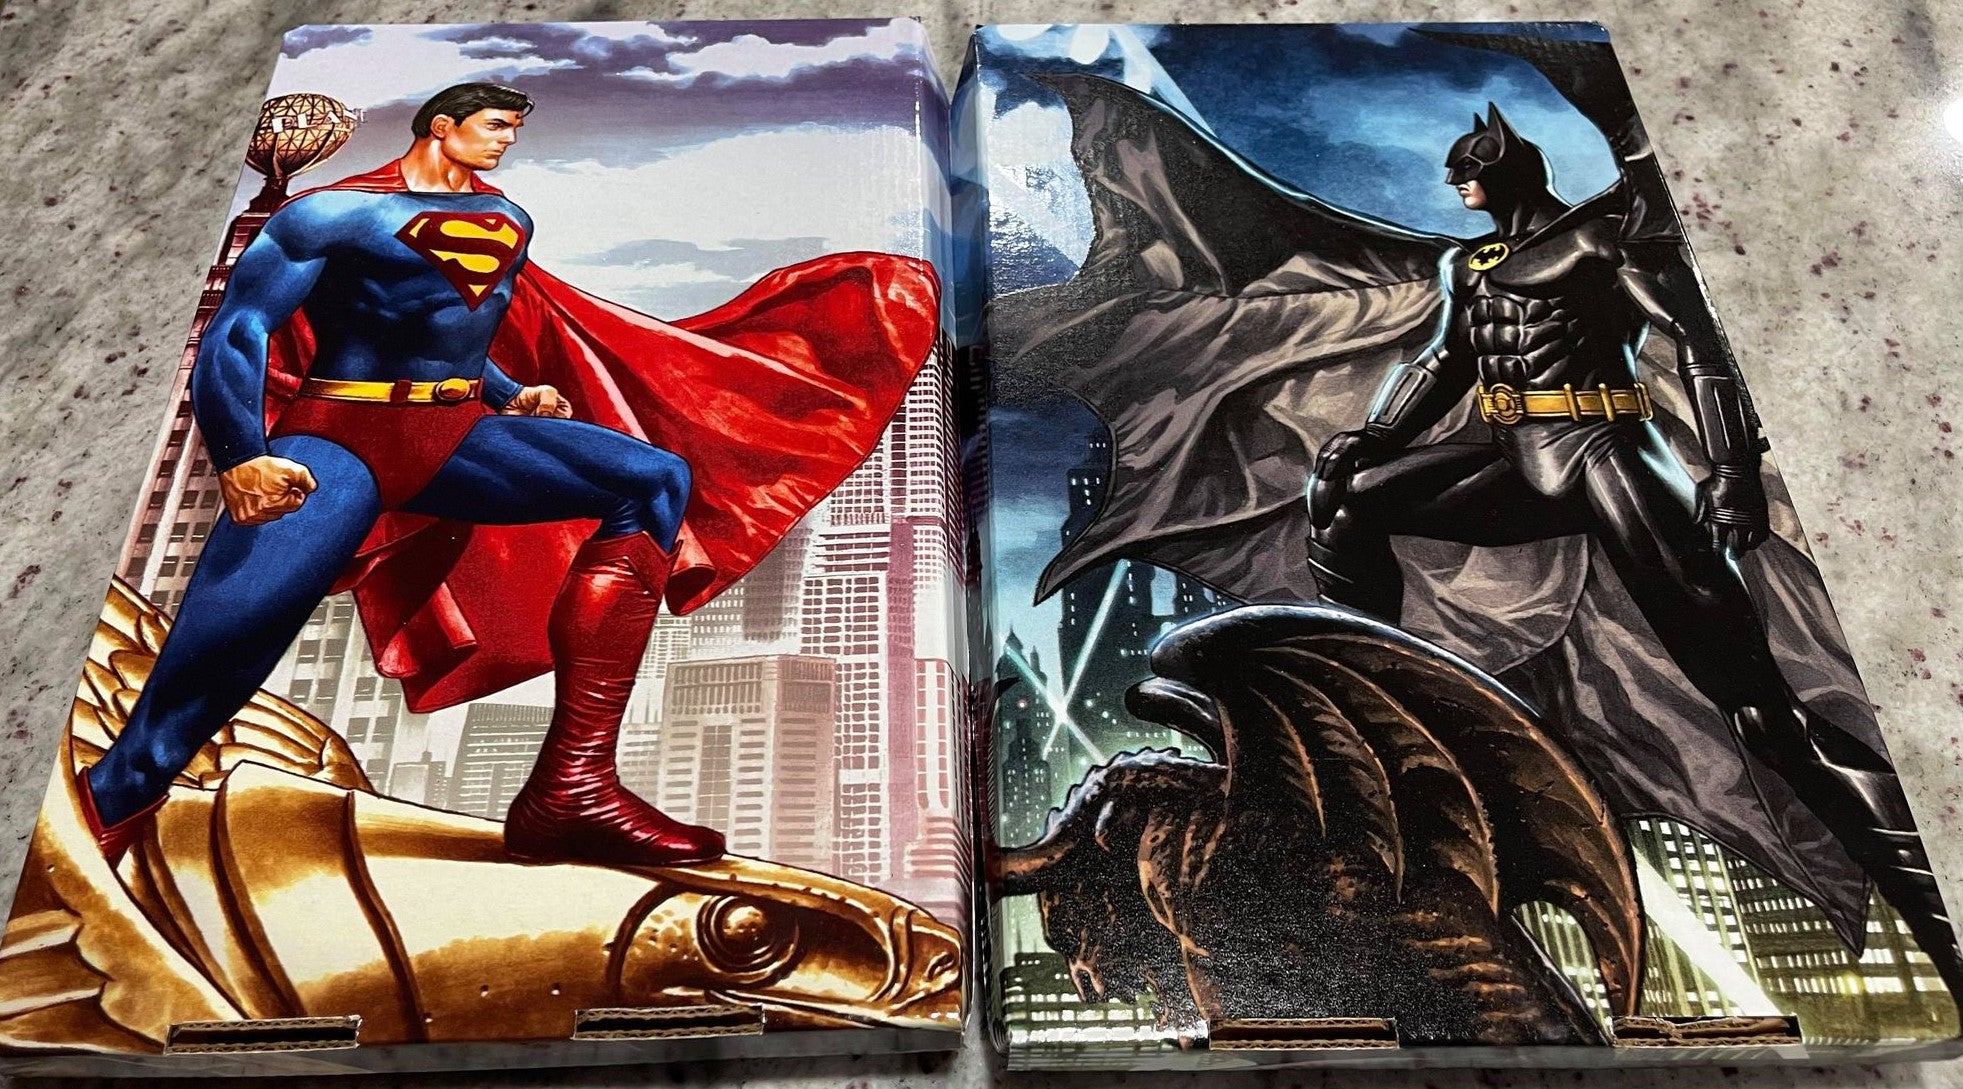 BATMAN 89 #1 & SUPERMAN 78 #1 MICO SUAYAN CONVENTION EXCLUSIVE VARIANT SET WITH COLLECTOR' BOX